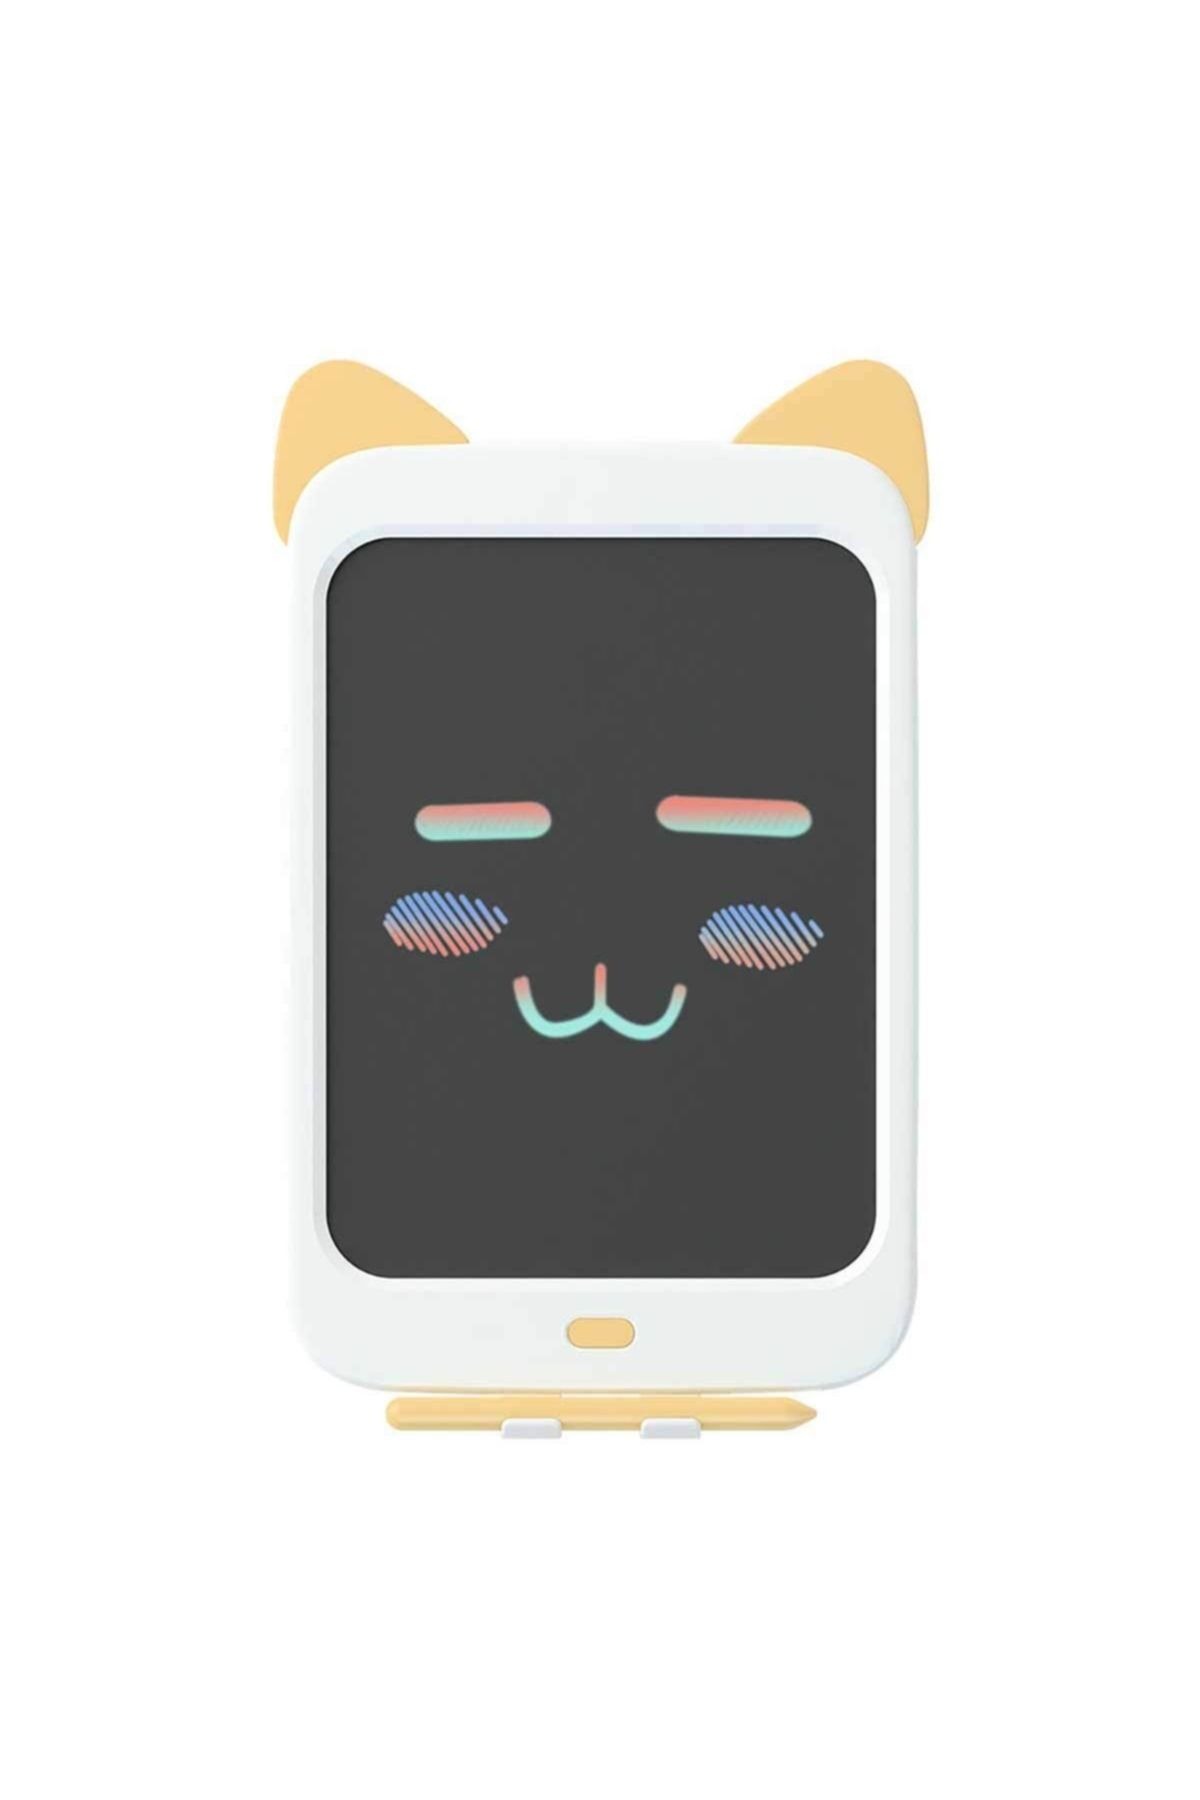 Miniso Mınıso Xiaomi Wicue Sarı Kedi Lcd Dijital Renkli Çizim Tableti 10 Inch